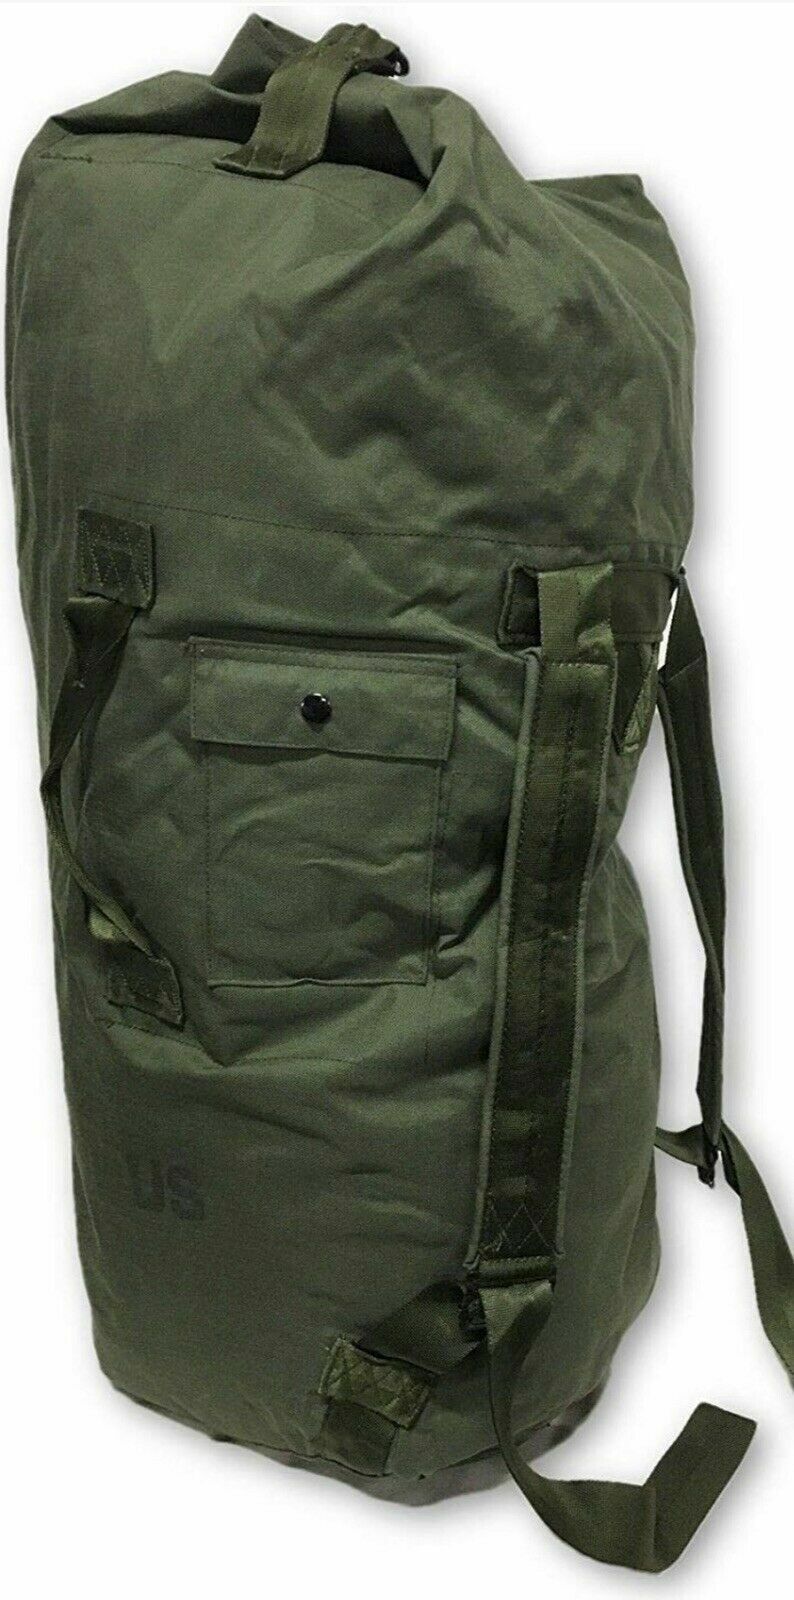 USGI Military / Army Duffel / Sea Bag Luggage Top Load 2 Strap OD Nylon - Good